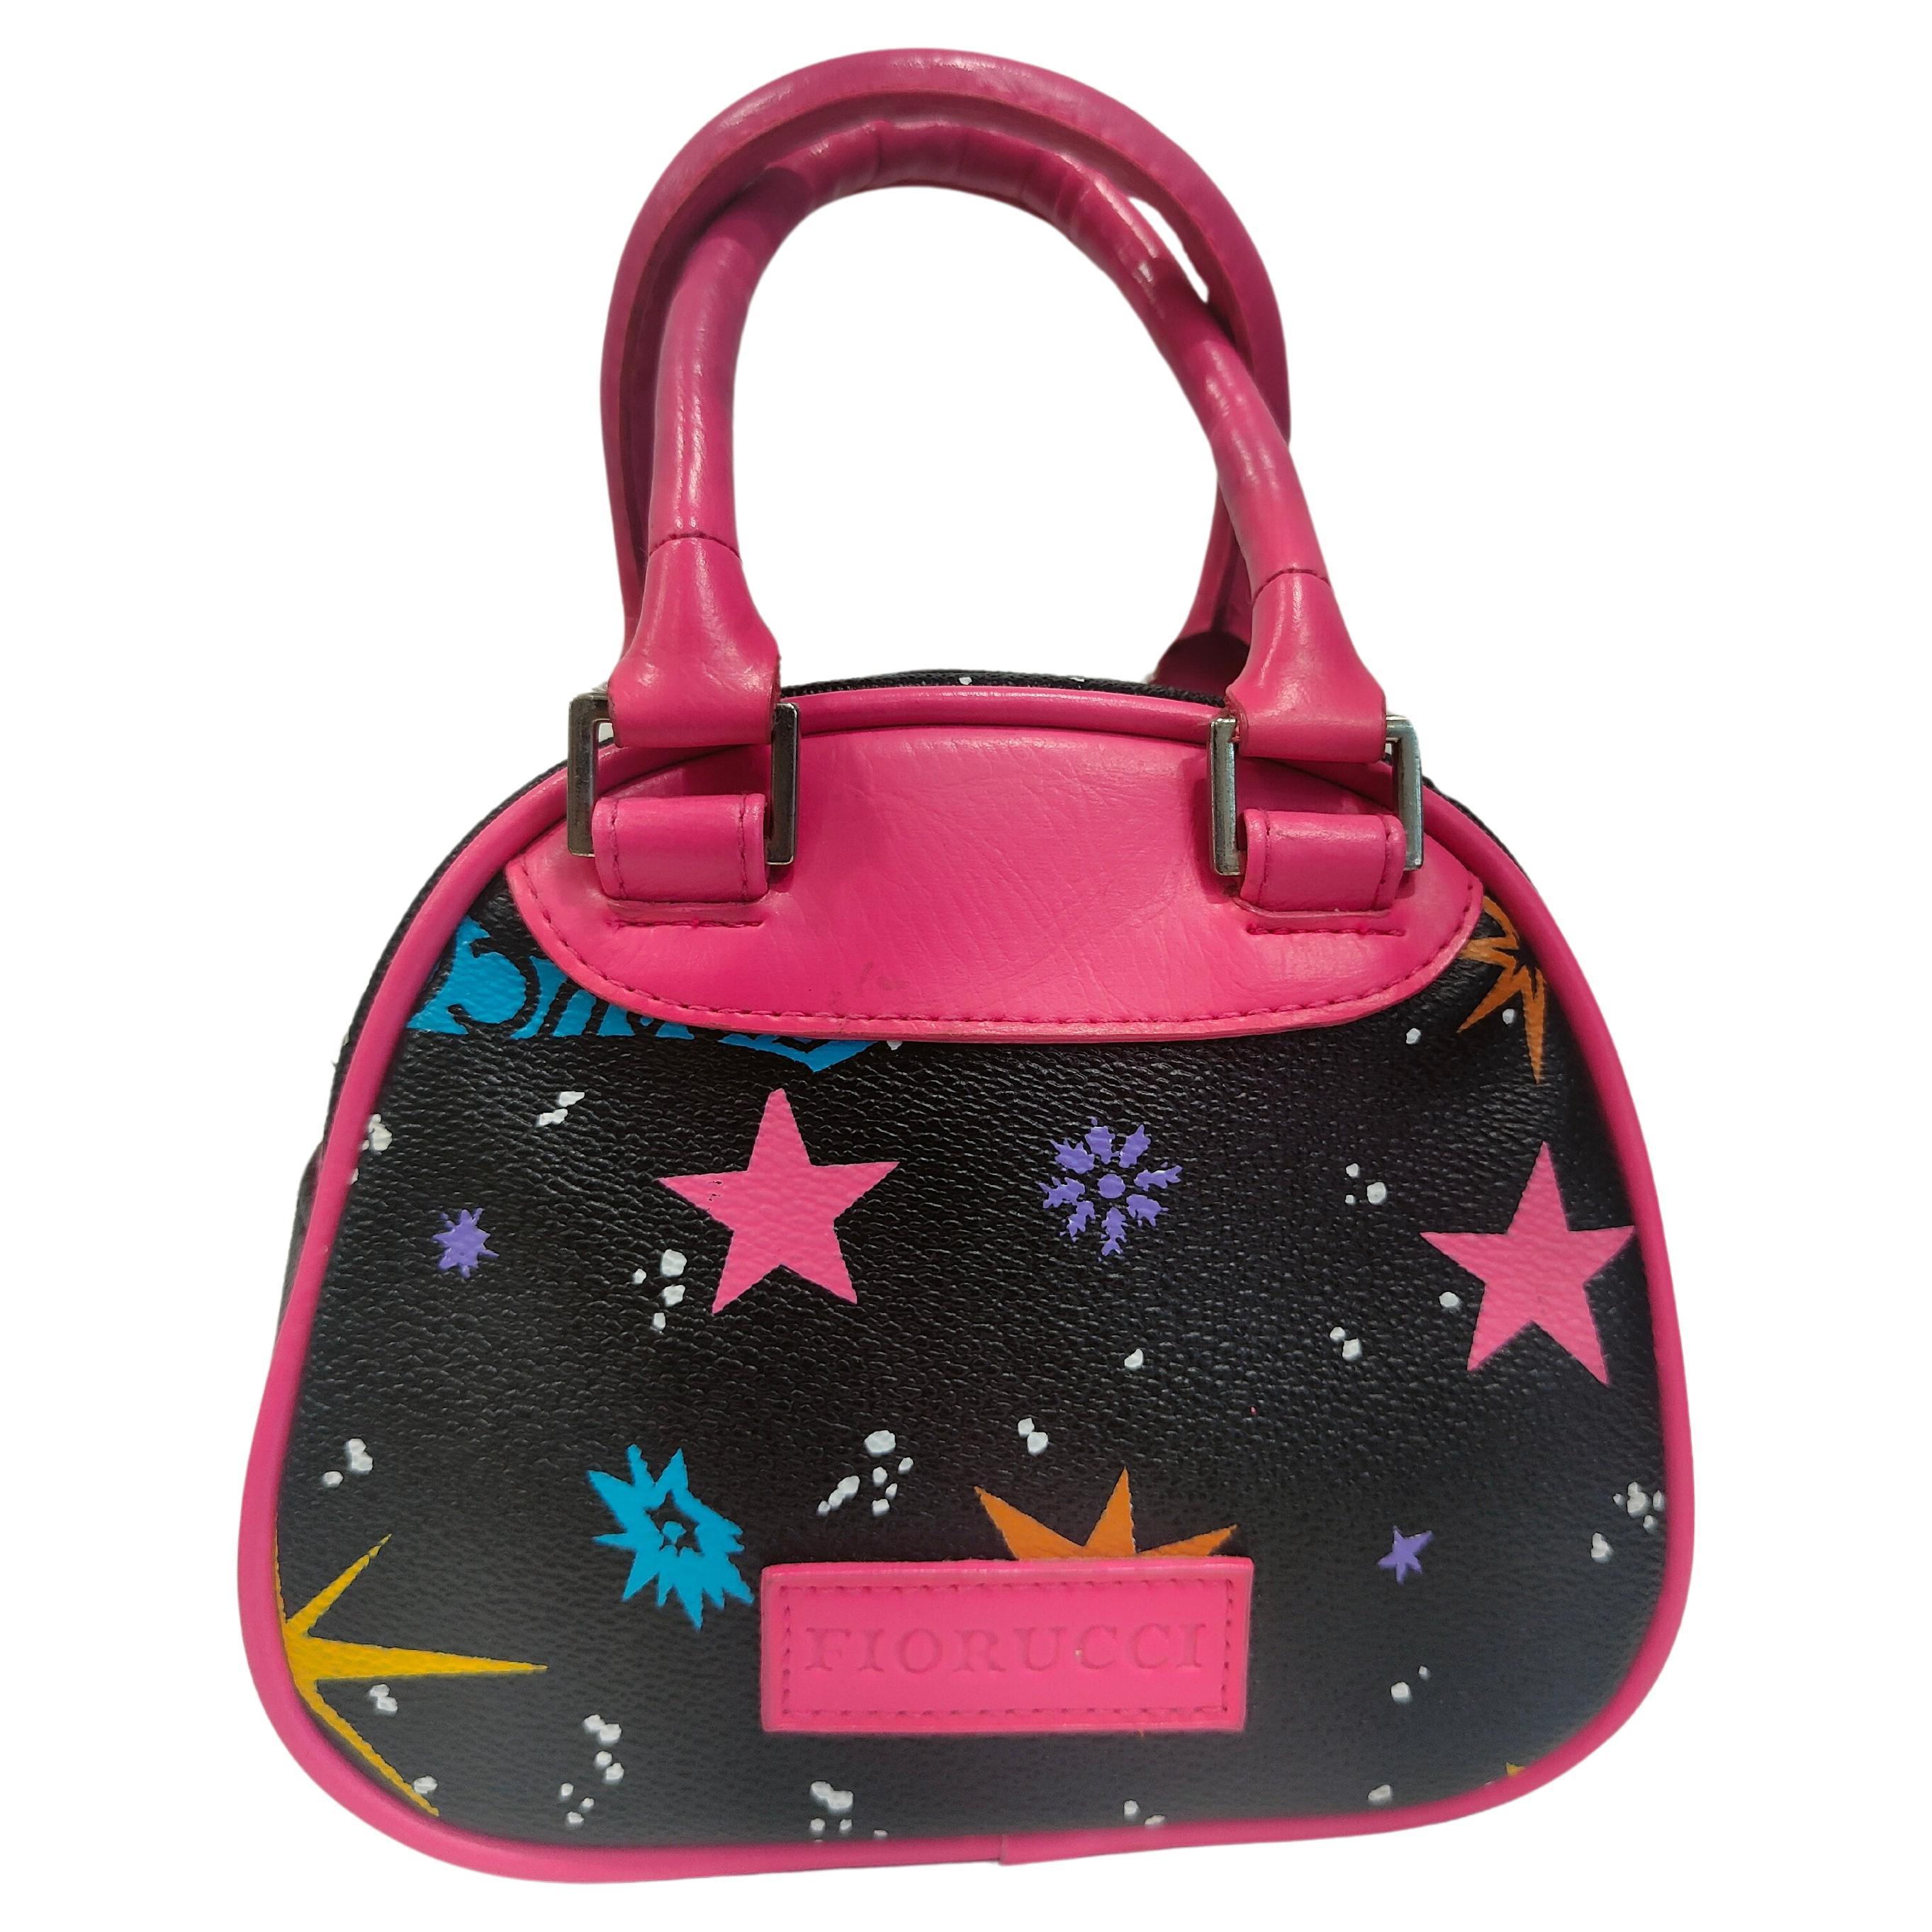 Fiorucci multicoloured leather handlebag 